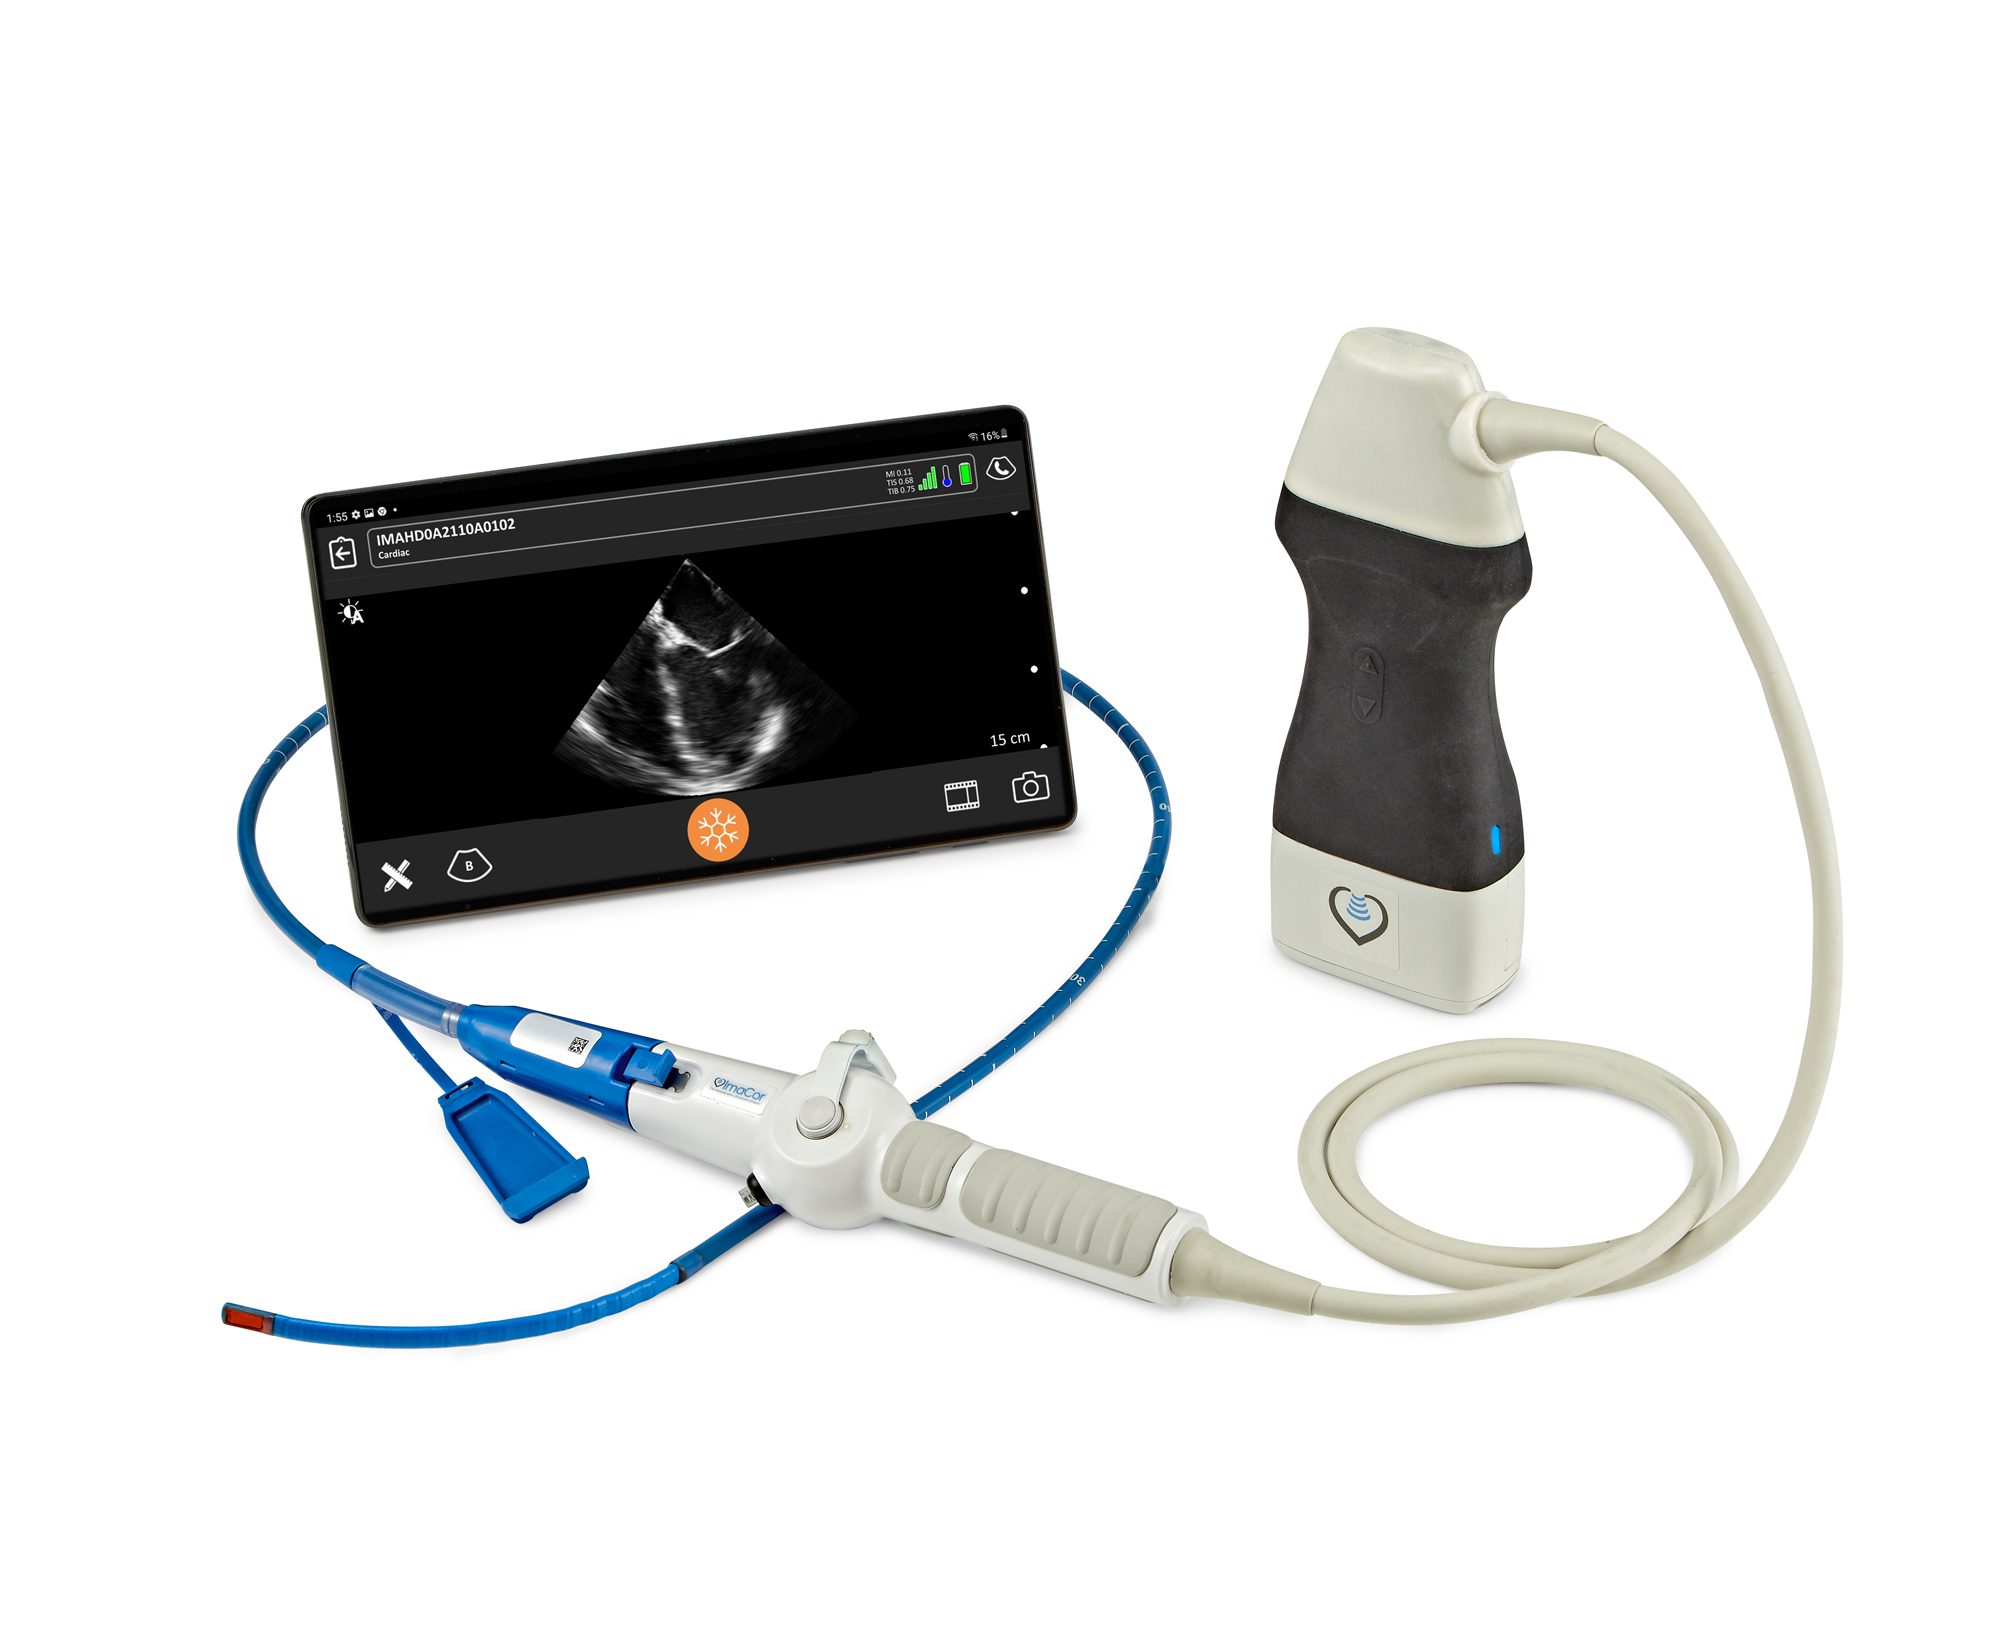 medsinglong linéaire ultrasons scanner médical ultrasons